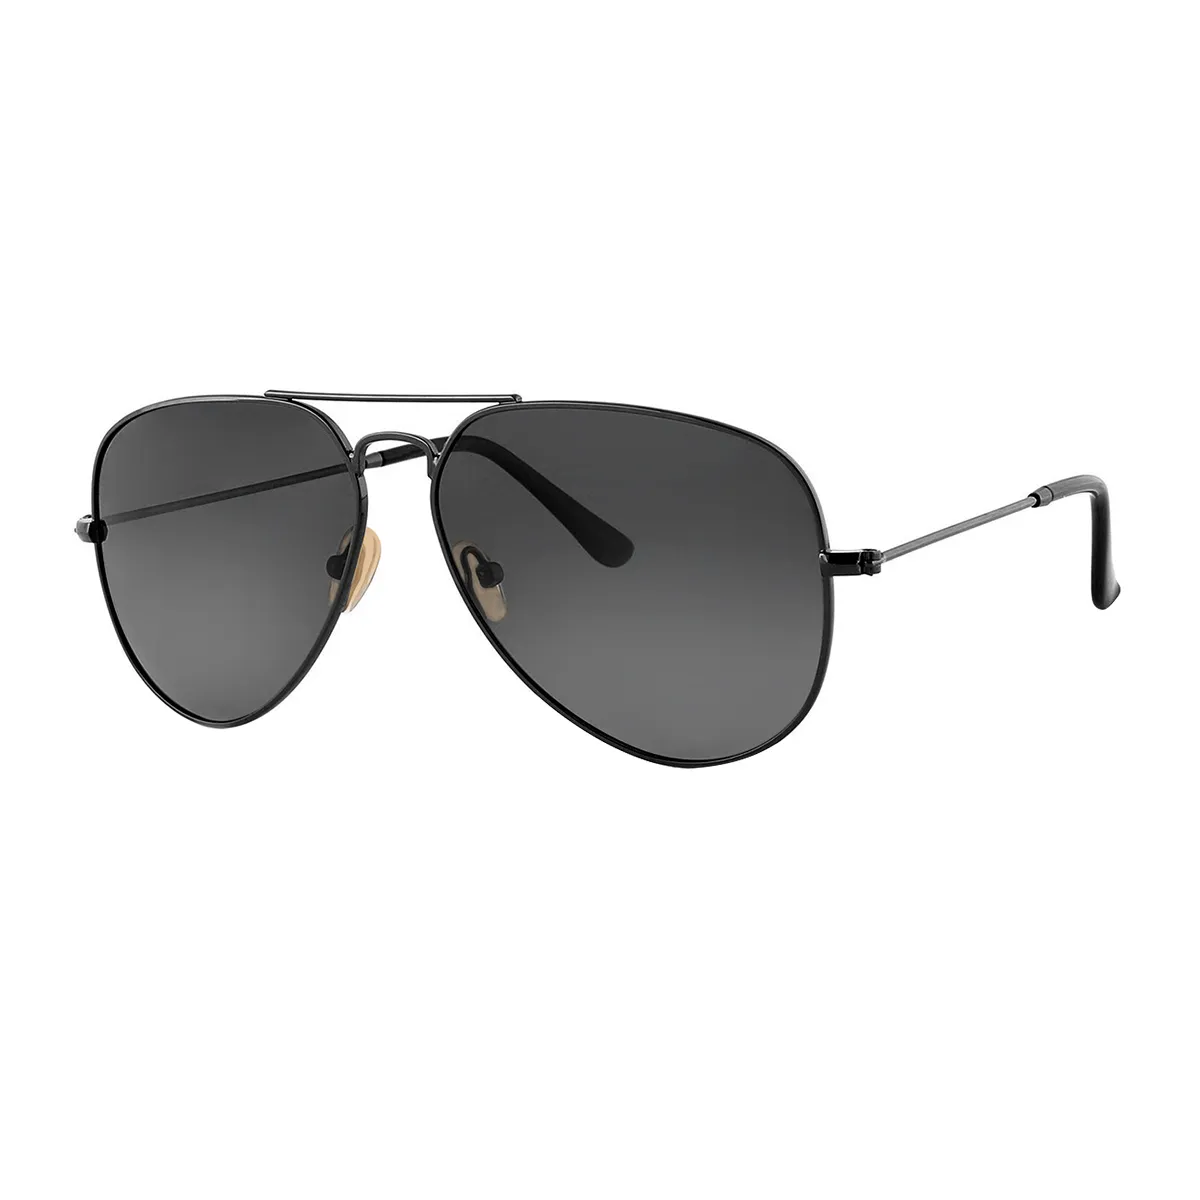 Conlon - Aviator Gunmetal Sunglasses for Men & Women